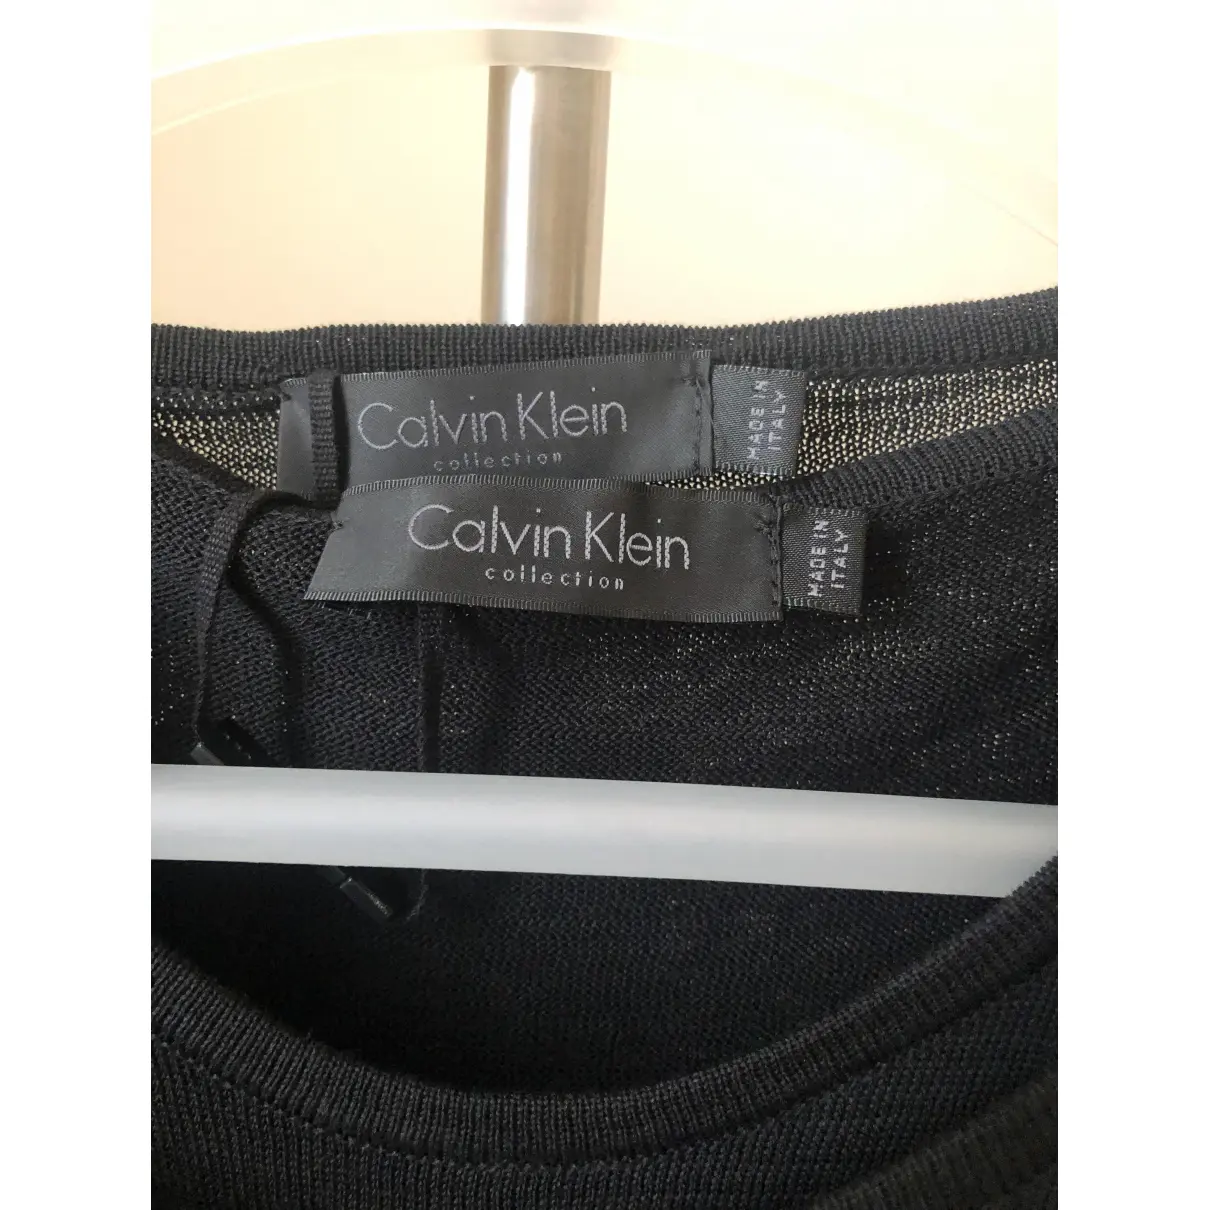 Twin-set Calvin Klein